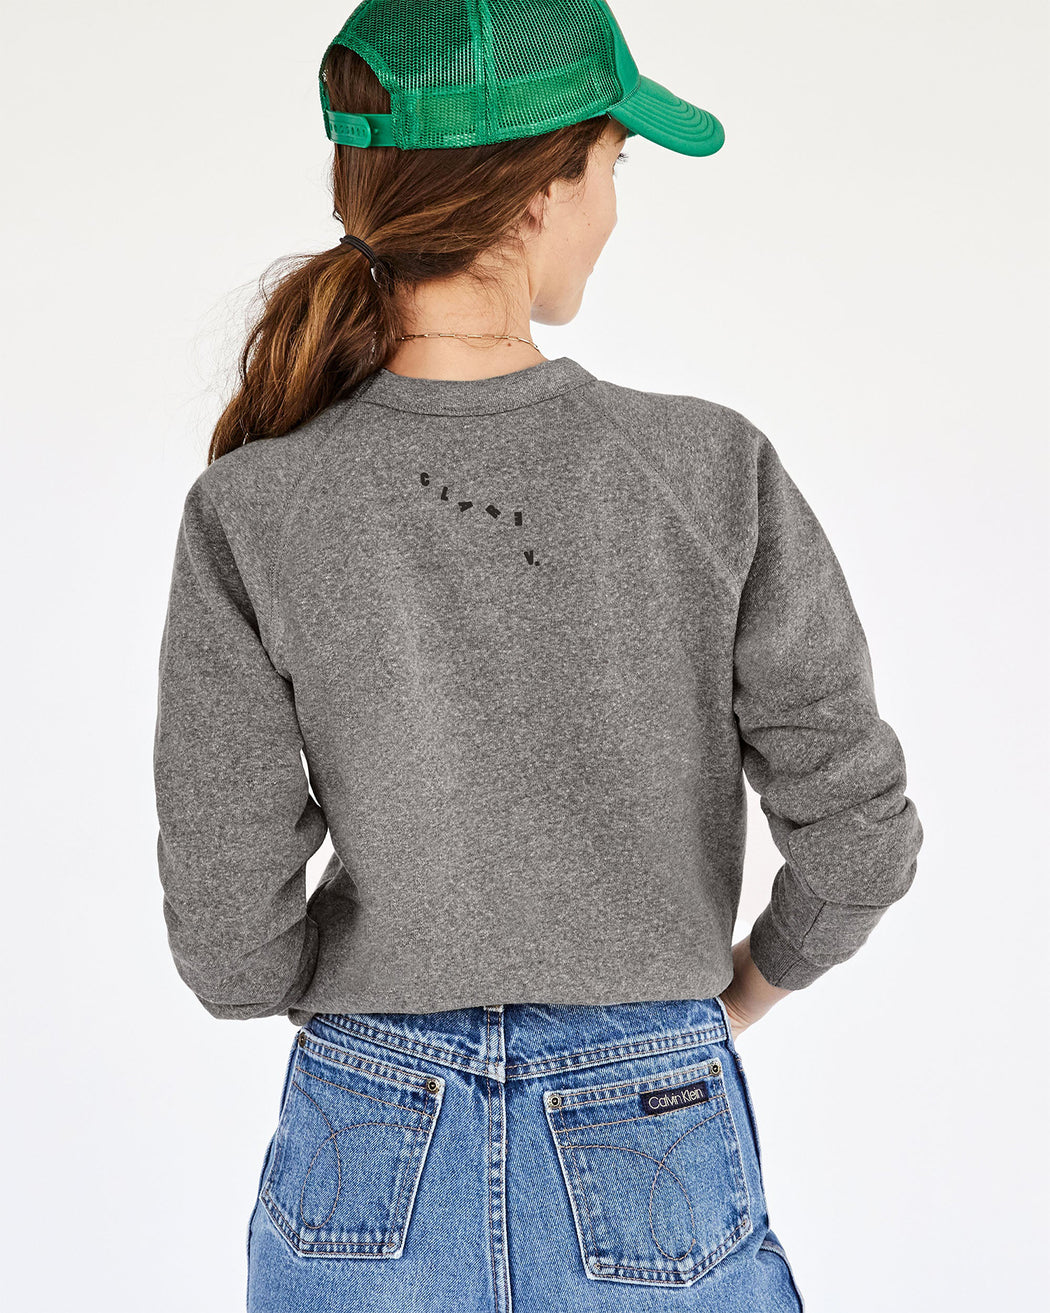 Masculin Féminin Sweatshirt – Grey